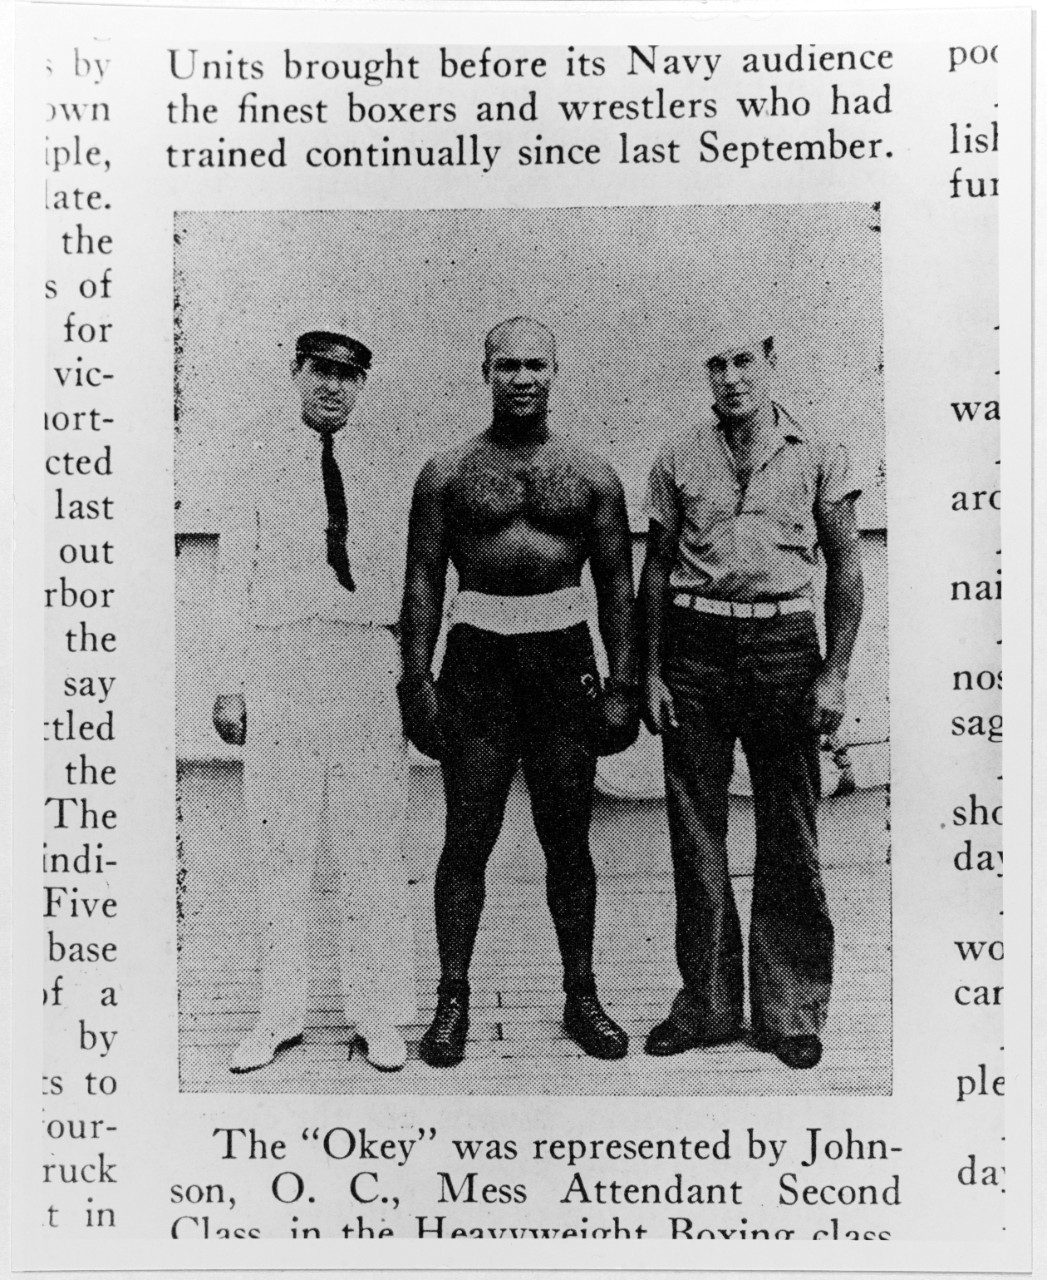 Otis C. Johnson, Mess Attendant Second Class, 1940 Fleet Heavyweight Champion